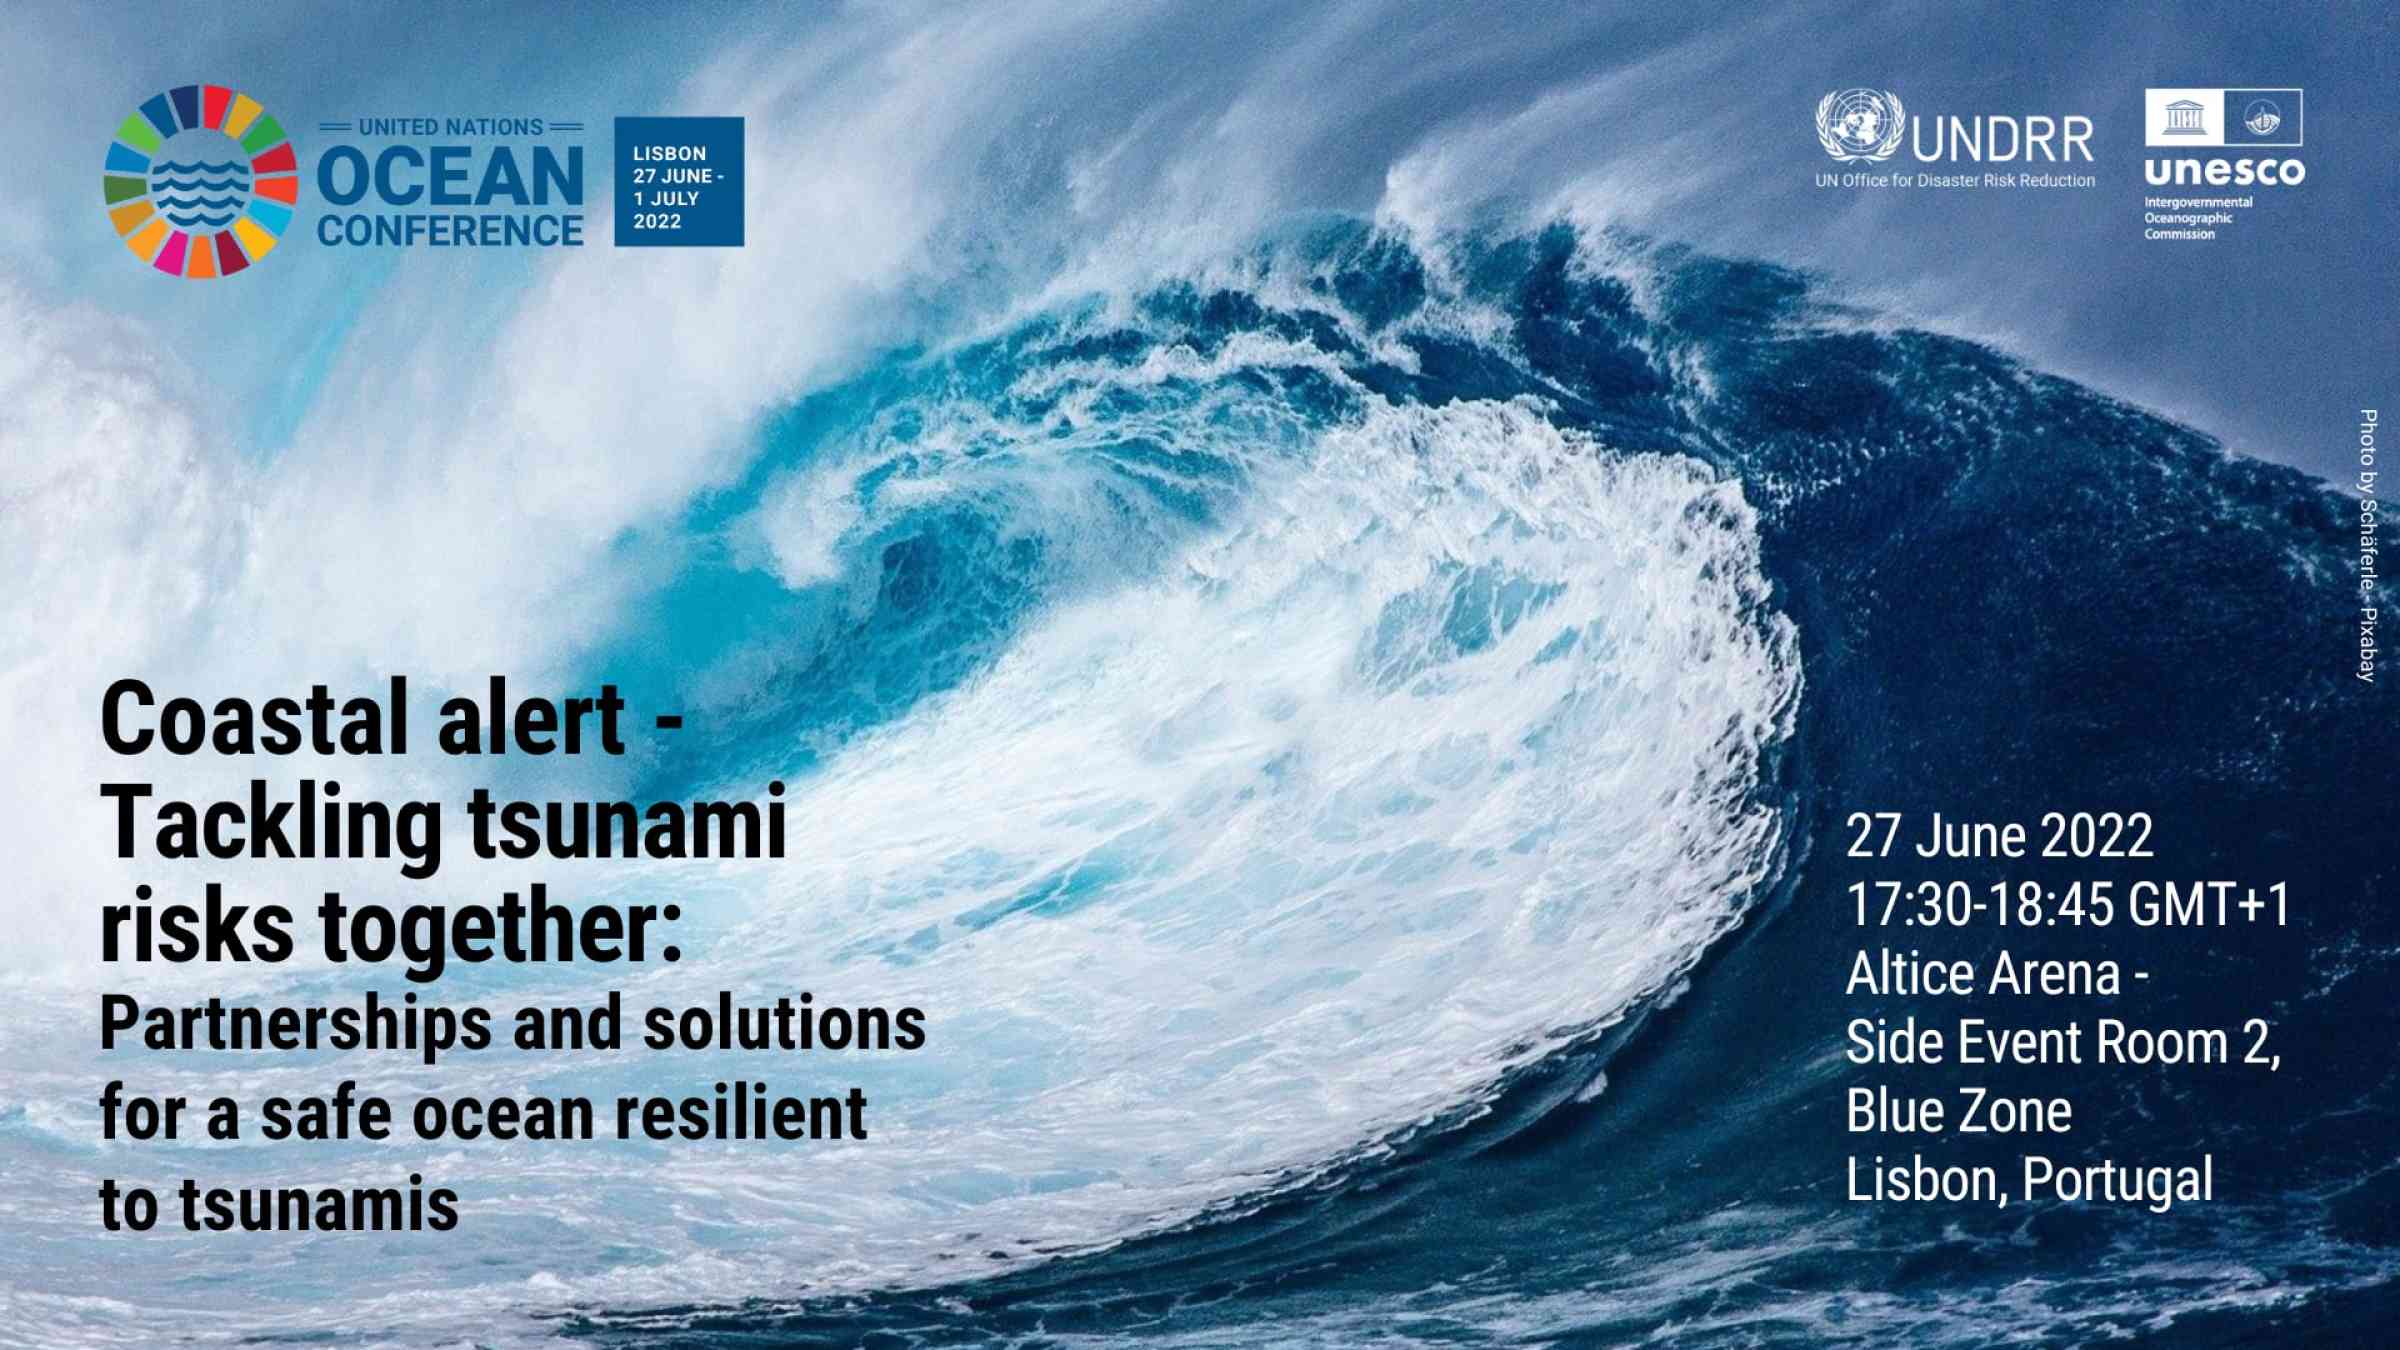 Social card for the event "Coastal alert - Tackling tsunami risks together".